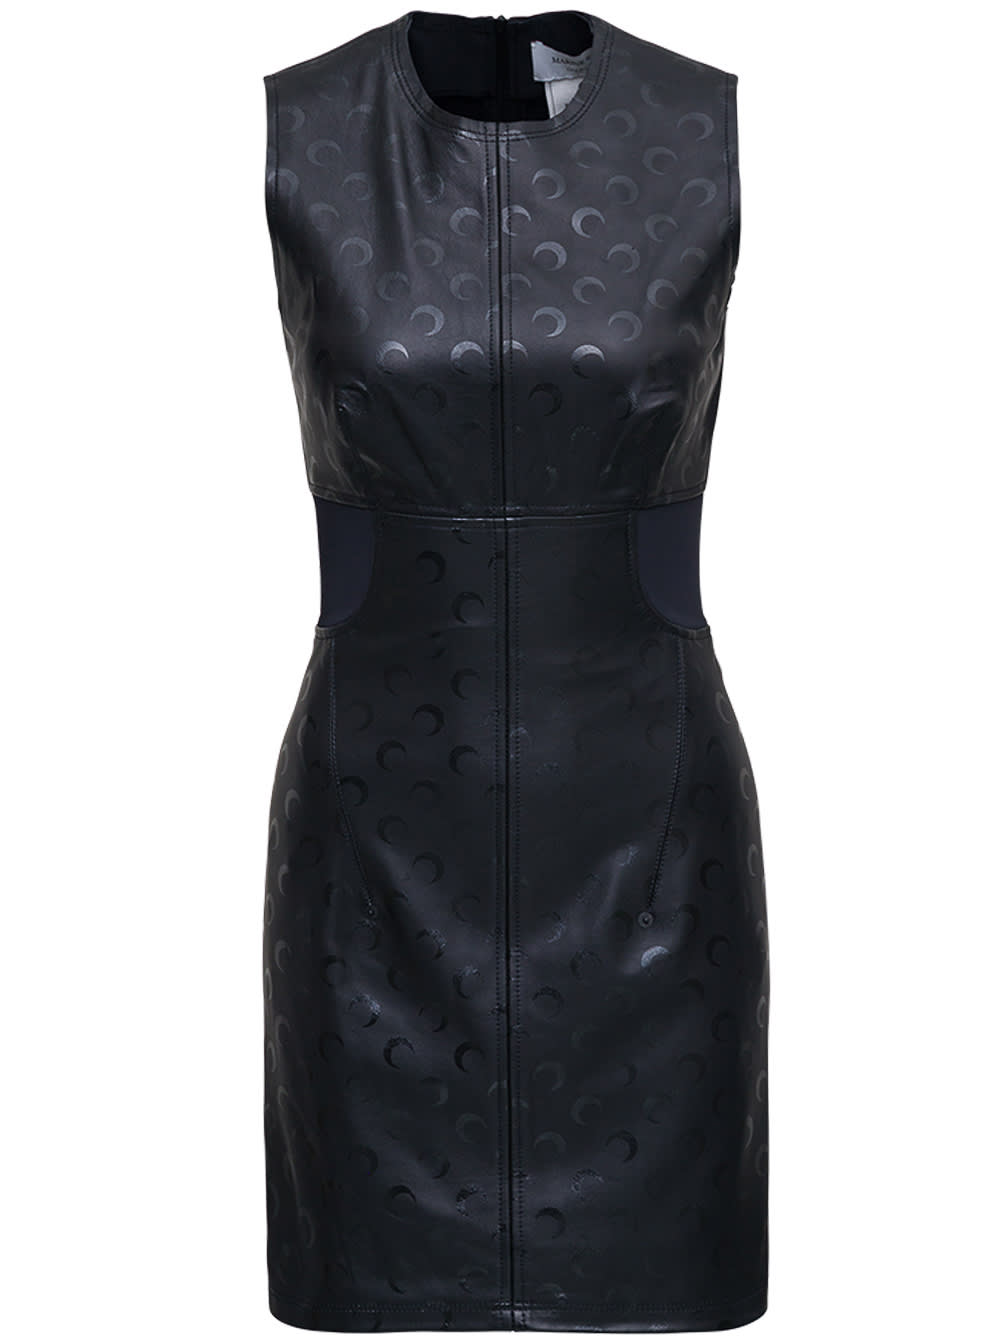 Marine Serre Black Leather Sleeveless Dress With Moon Print